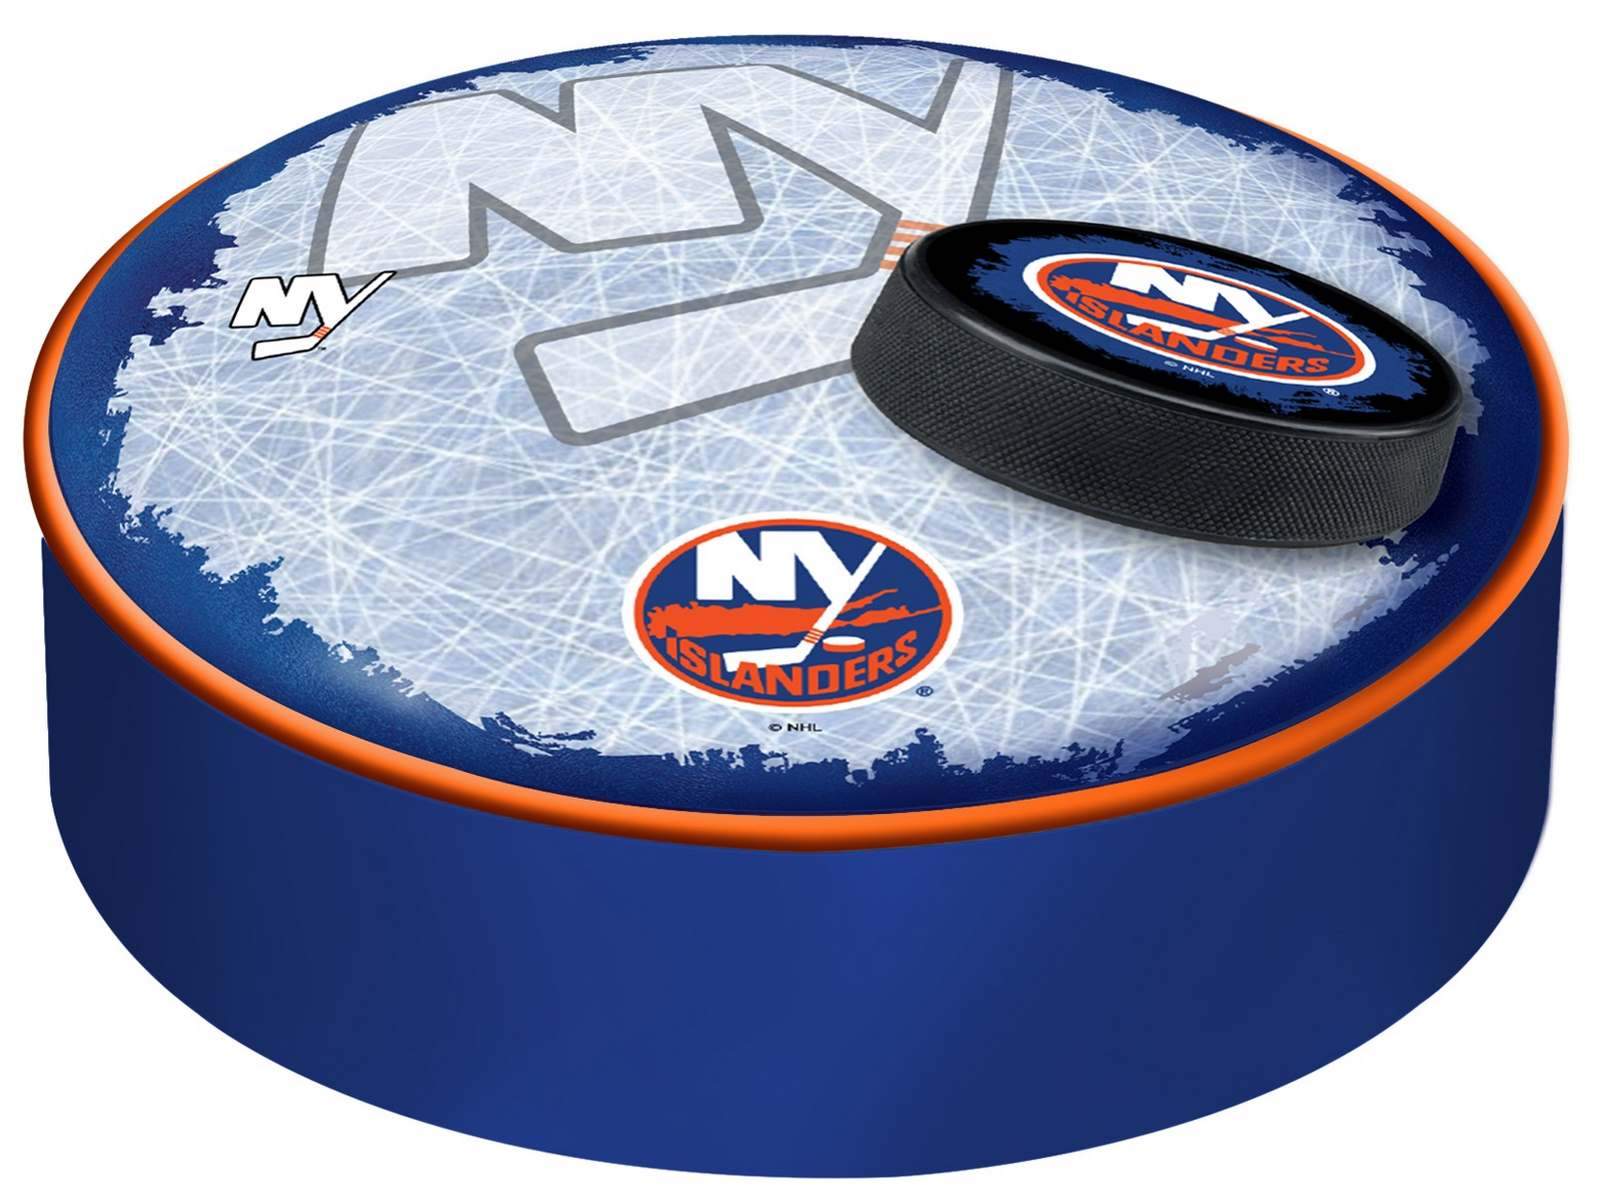 New York Islanders Logo - New York Islanders Seat Cover - NY Islanders Logo on Hockey Ice